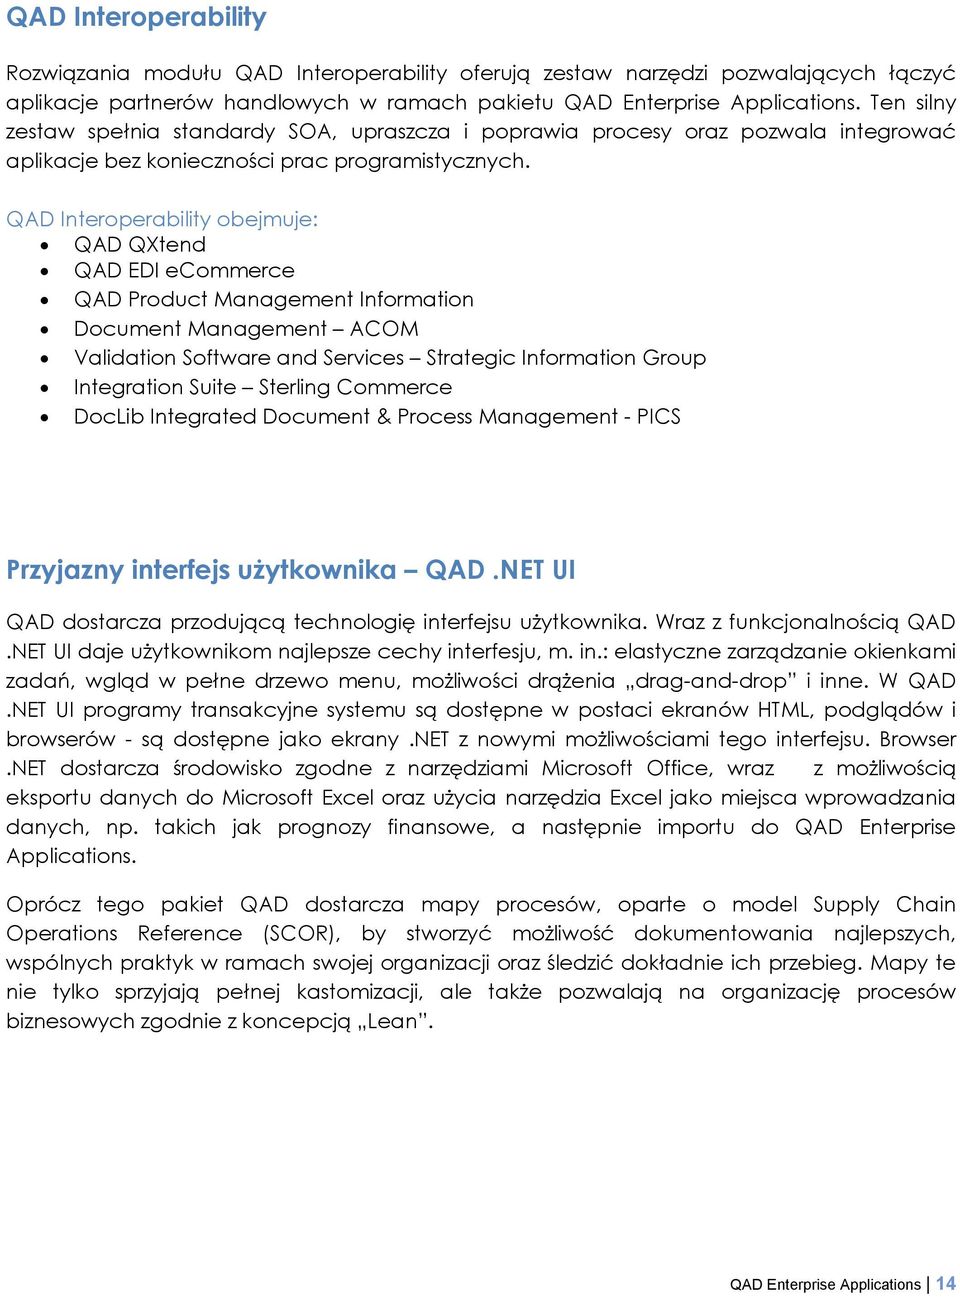 QAD Interoperability obejmuje: QAD QXtend QAD EDI ecommerce QAD Product Management Information Document Management ACOM Validation Software and Services Strategic Information Group Integration Suite